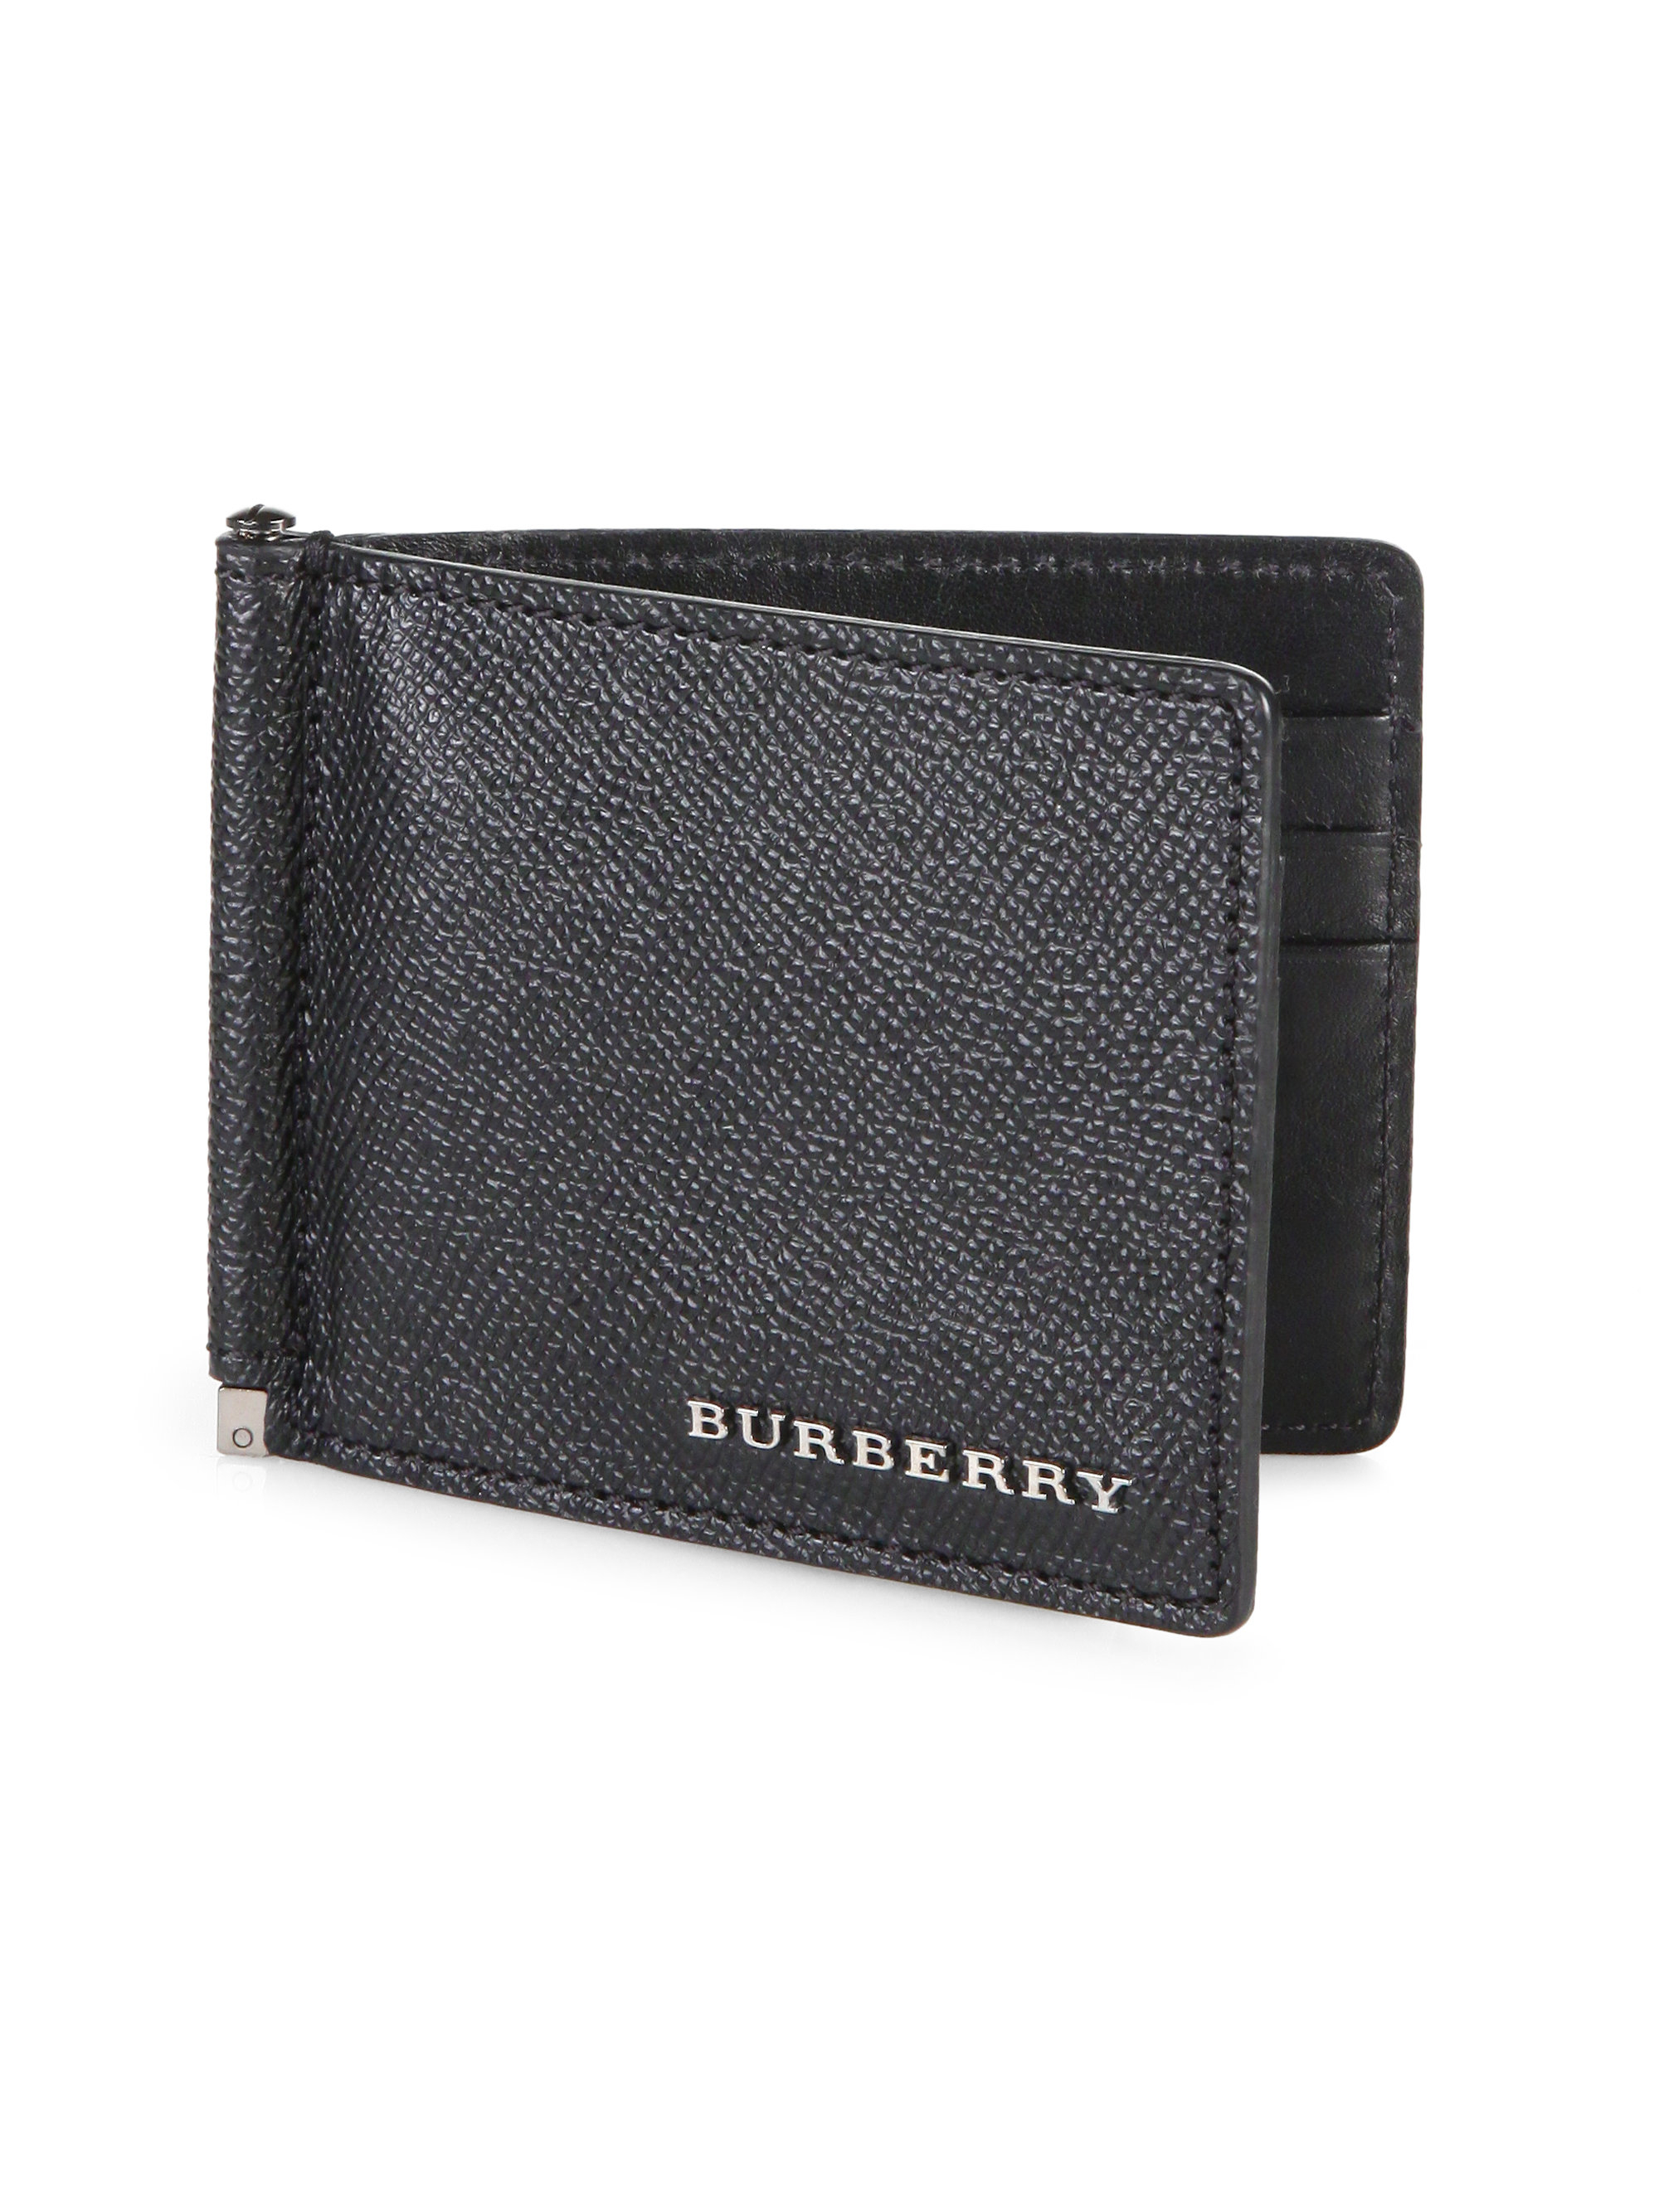 burberry wallet mens